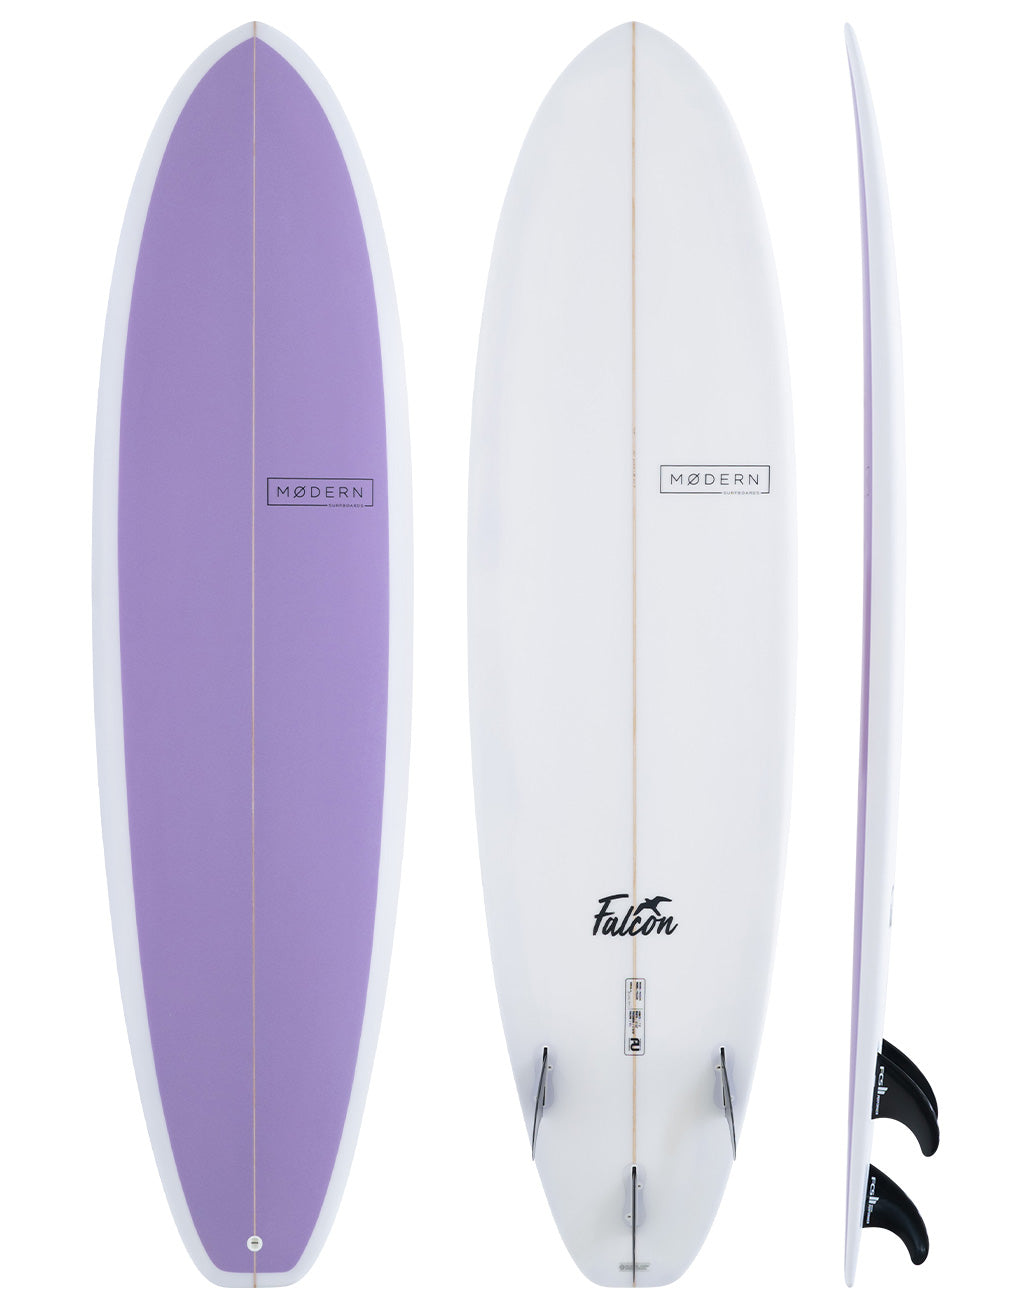 Modern Surfboard Falcon, mid length surfboard - lavender